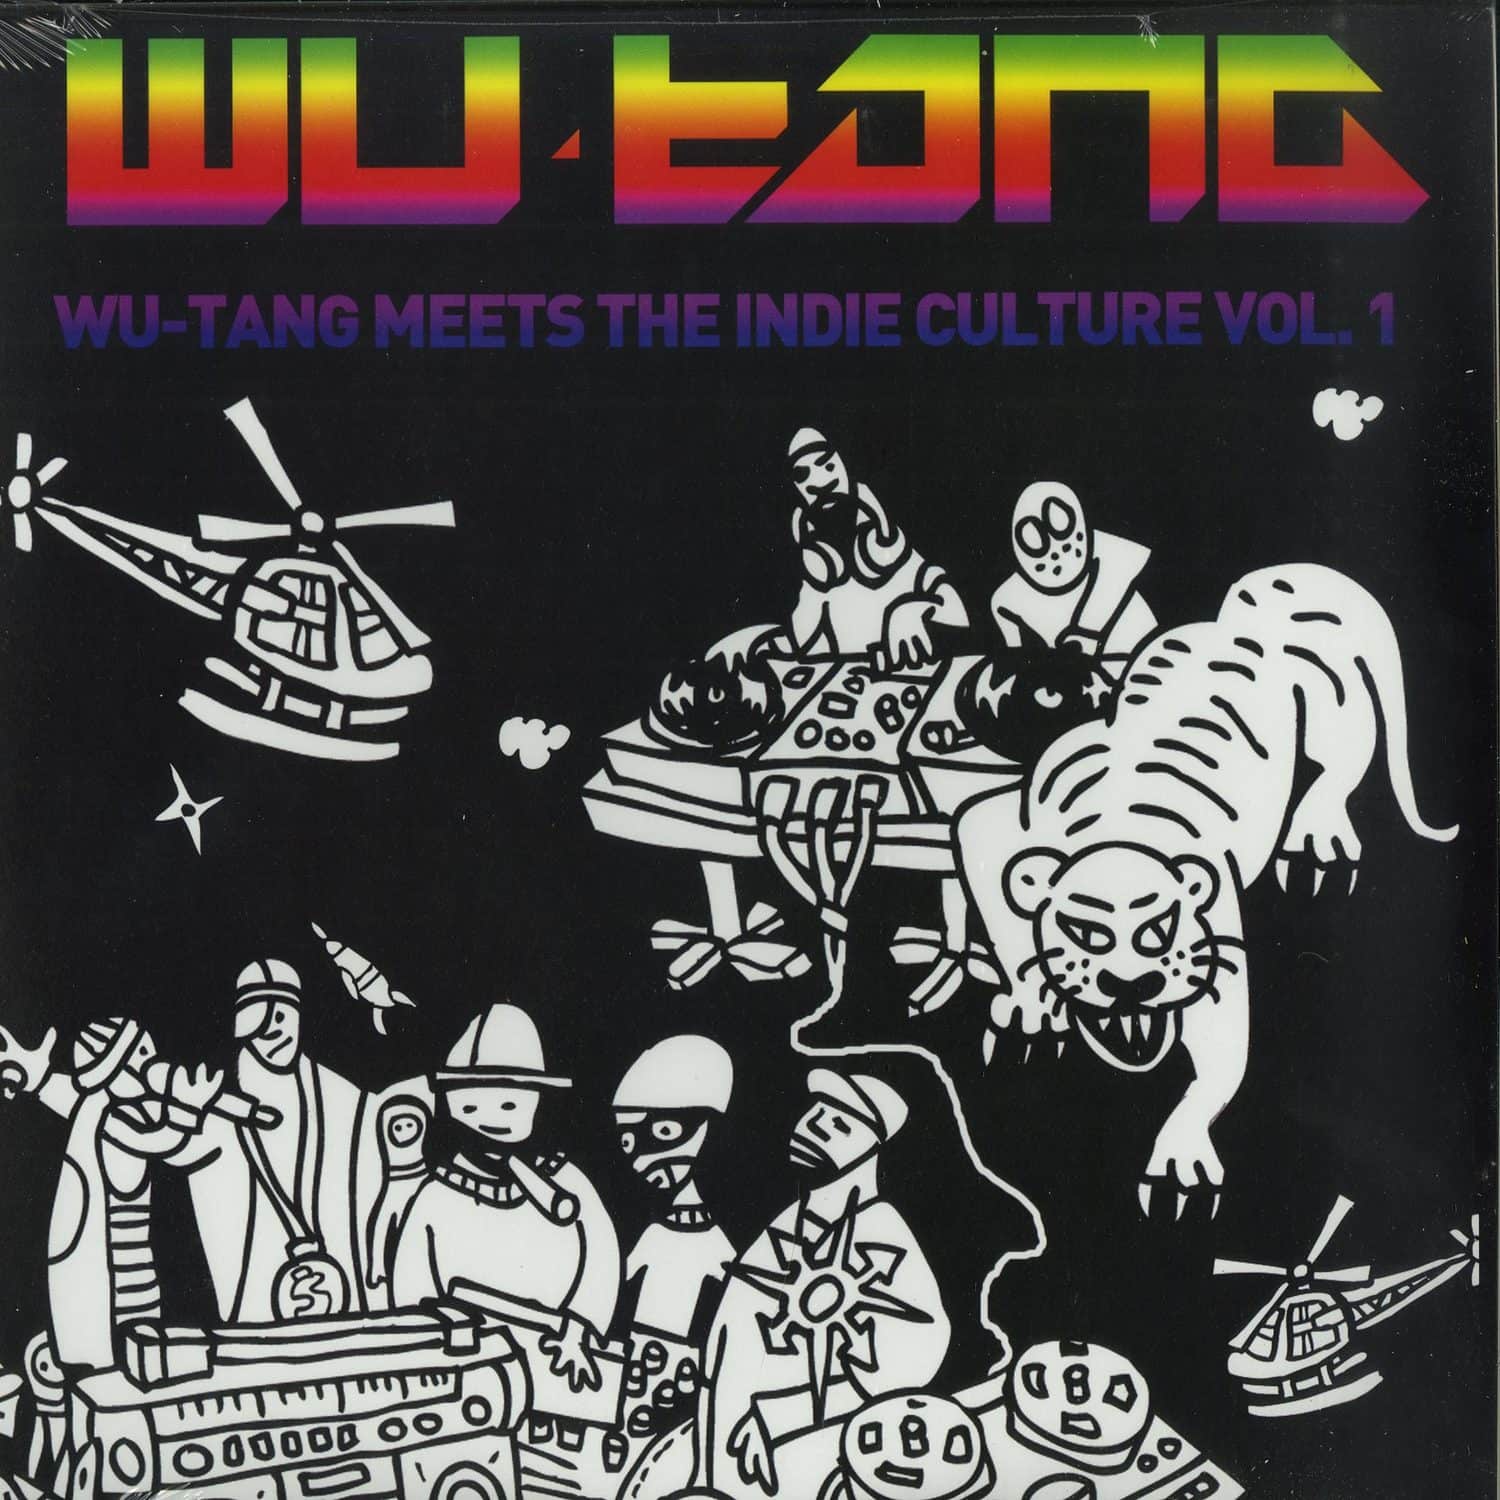 Wu-Tang Clan - WU-TANG MEETS THE INDIE CULTURE VOL.1 